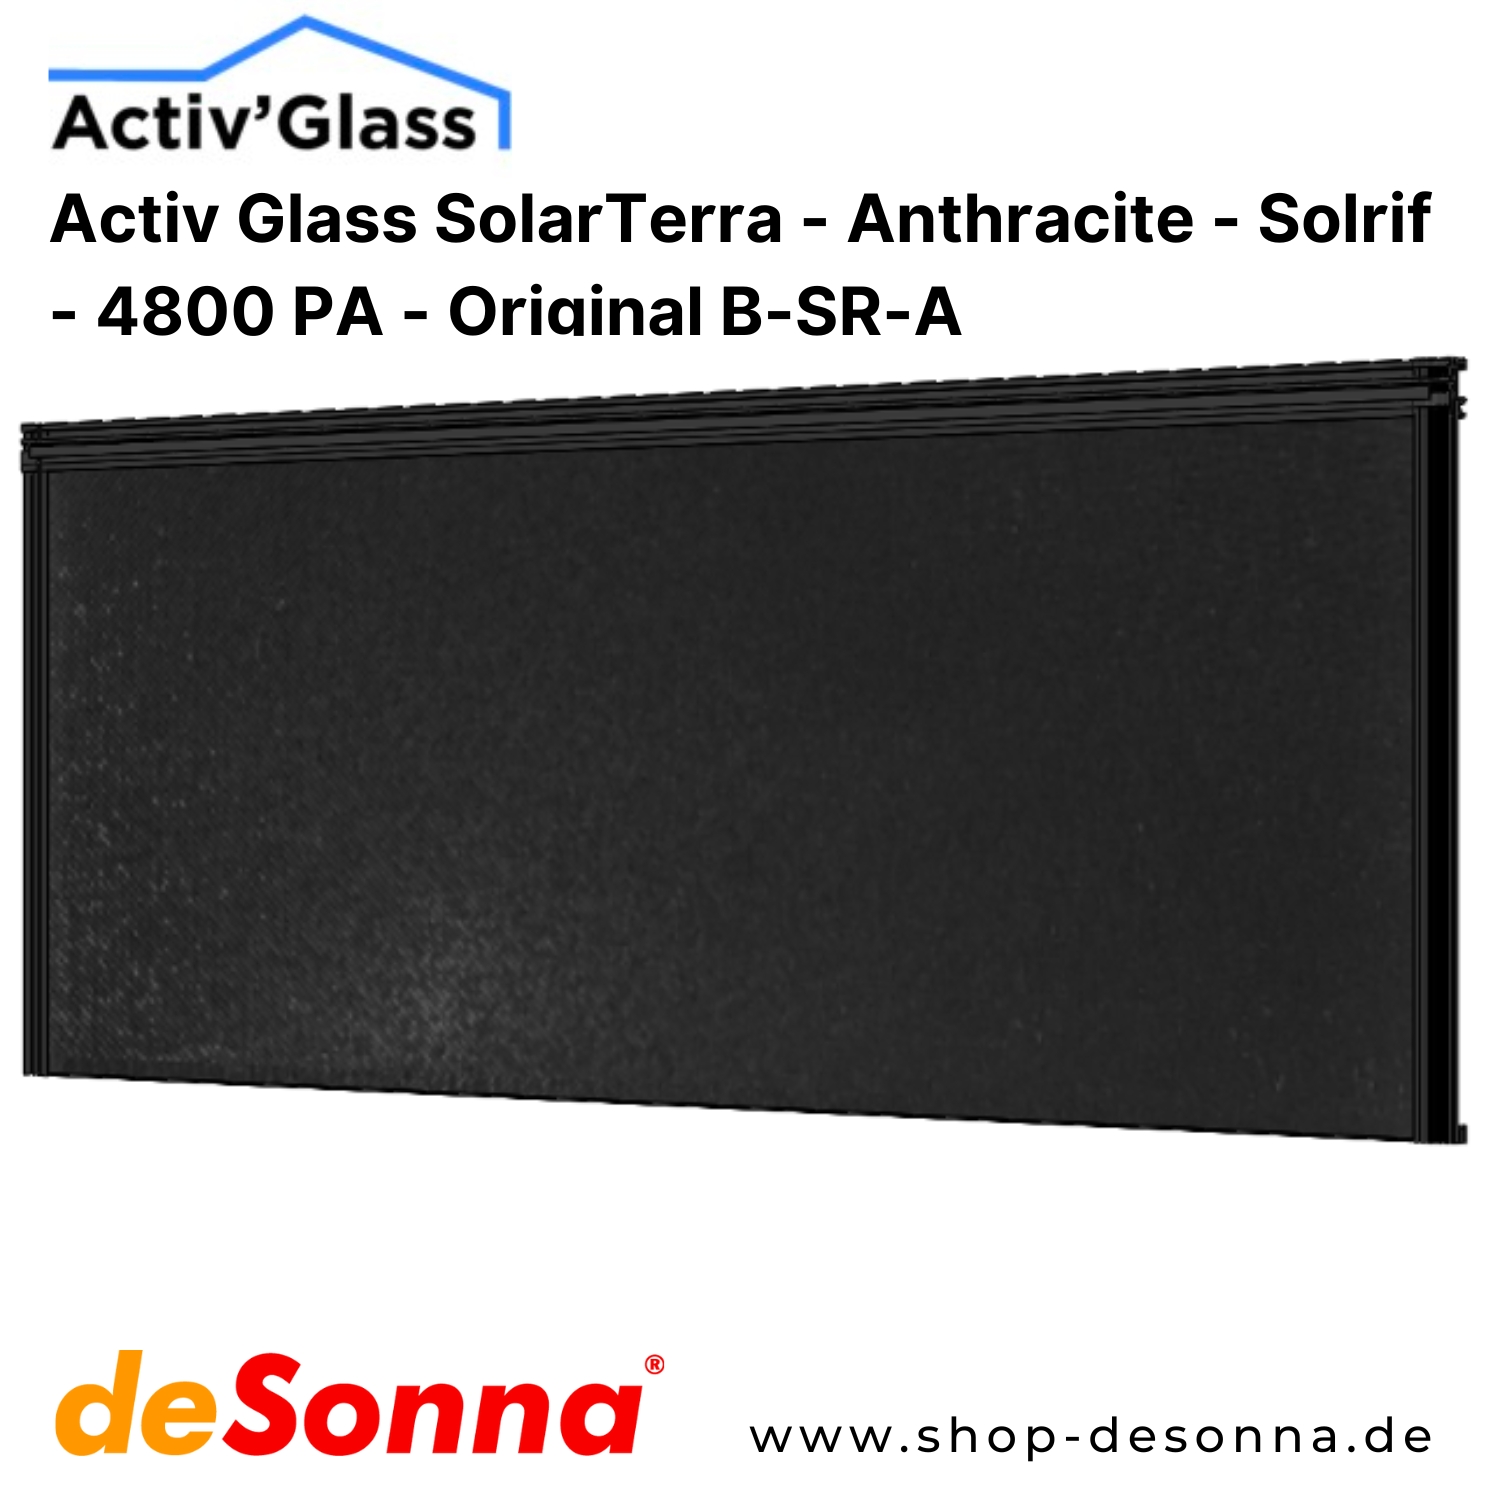 Activ‘Glass Solarterra Original B-SR-A - Antrhacite - 140 Wp - Solrif-Indach-Solarmodul